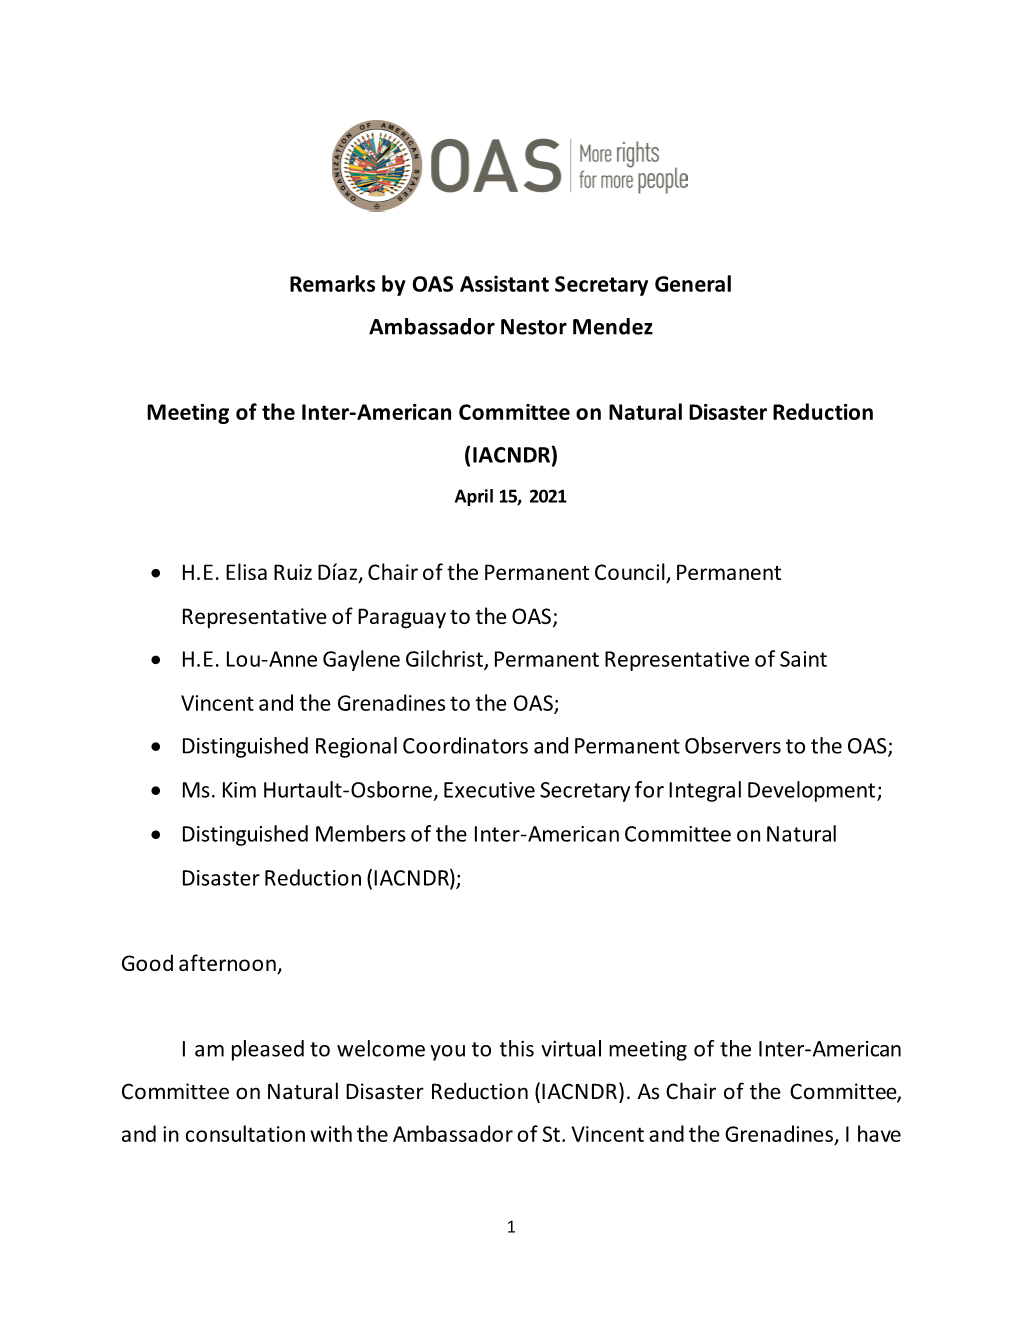 Remarks by OAS Assistant Secretary General Ambassador Nestor Mendez